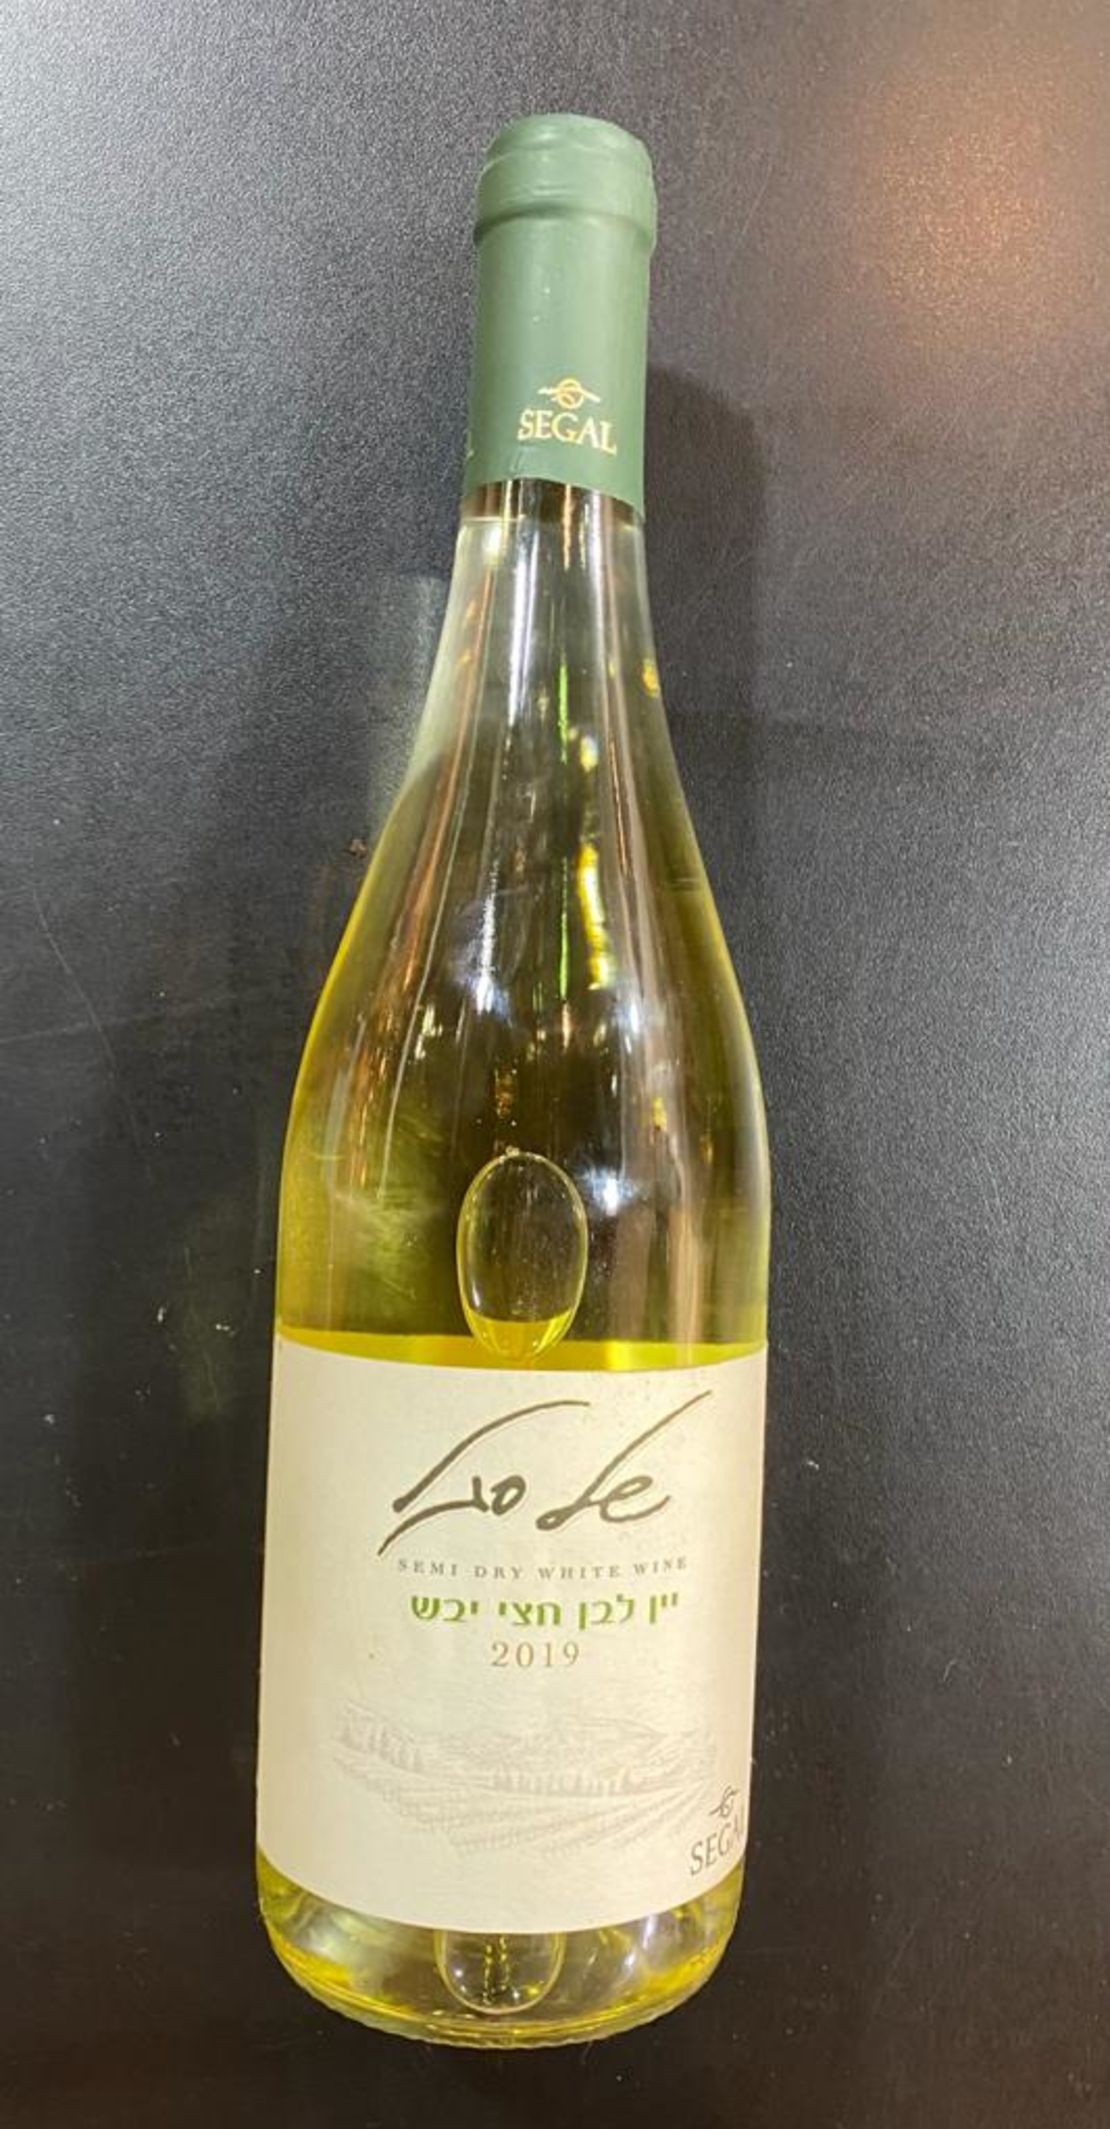 Segal - Semi Dry White Wine 2019 750ml